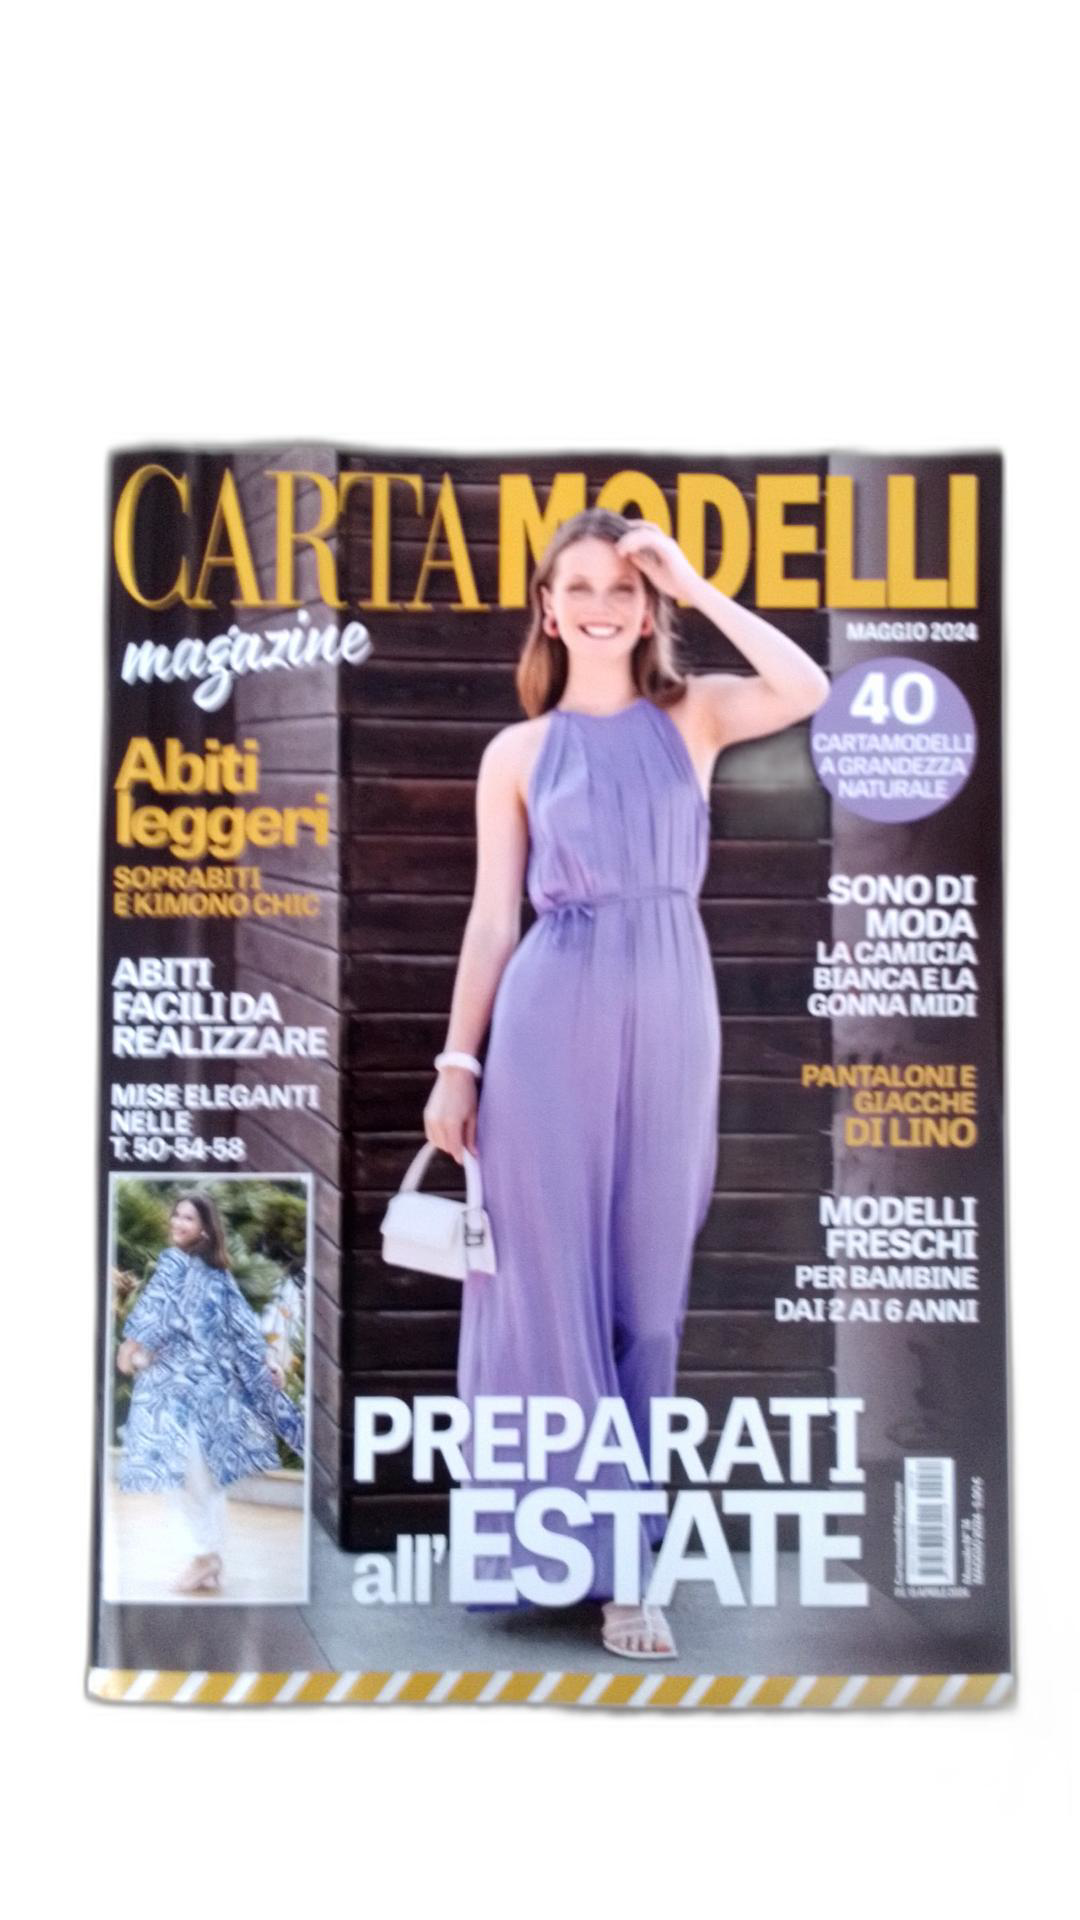 Cartamodelli magazine - 40074 - 18/4/2024